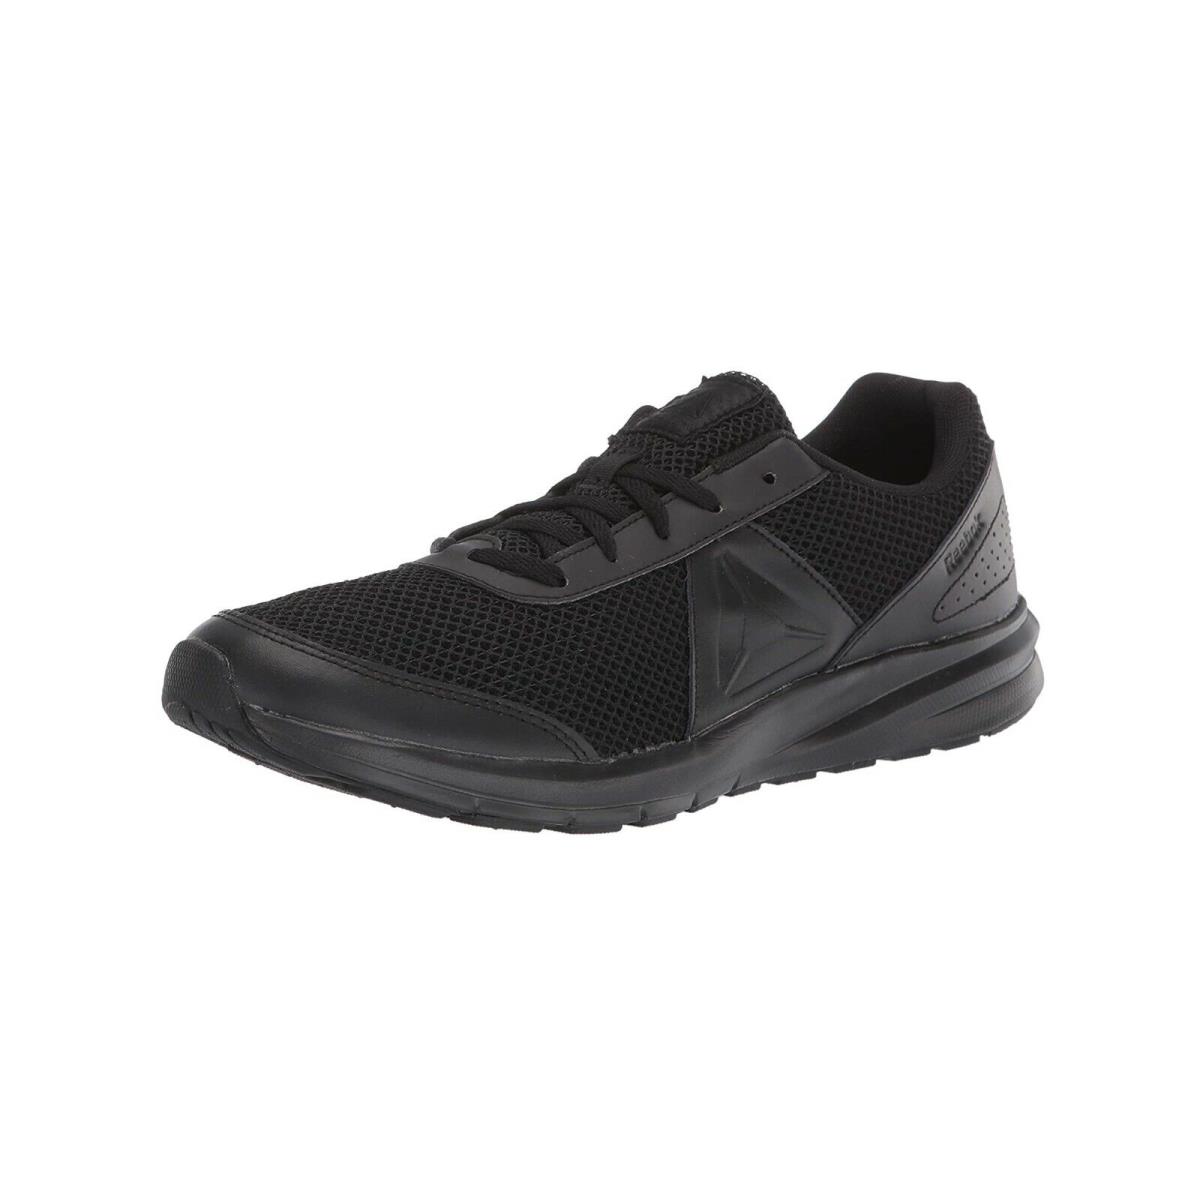 Reebok Runner 3.0 PR Men Sneakers Black Black Knit Running Shoes